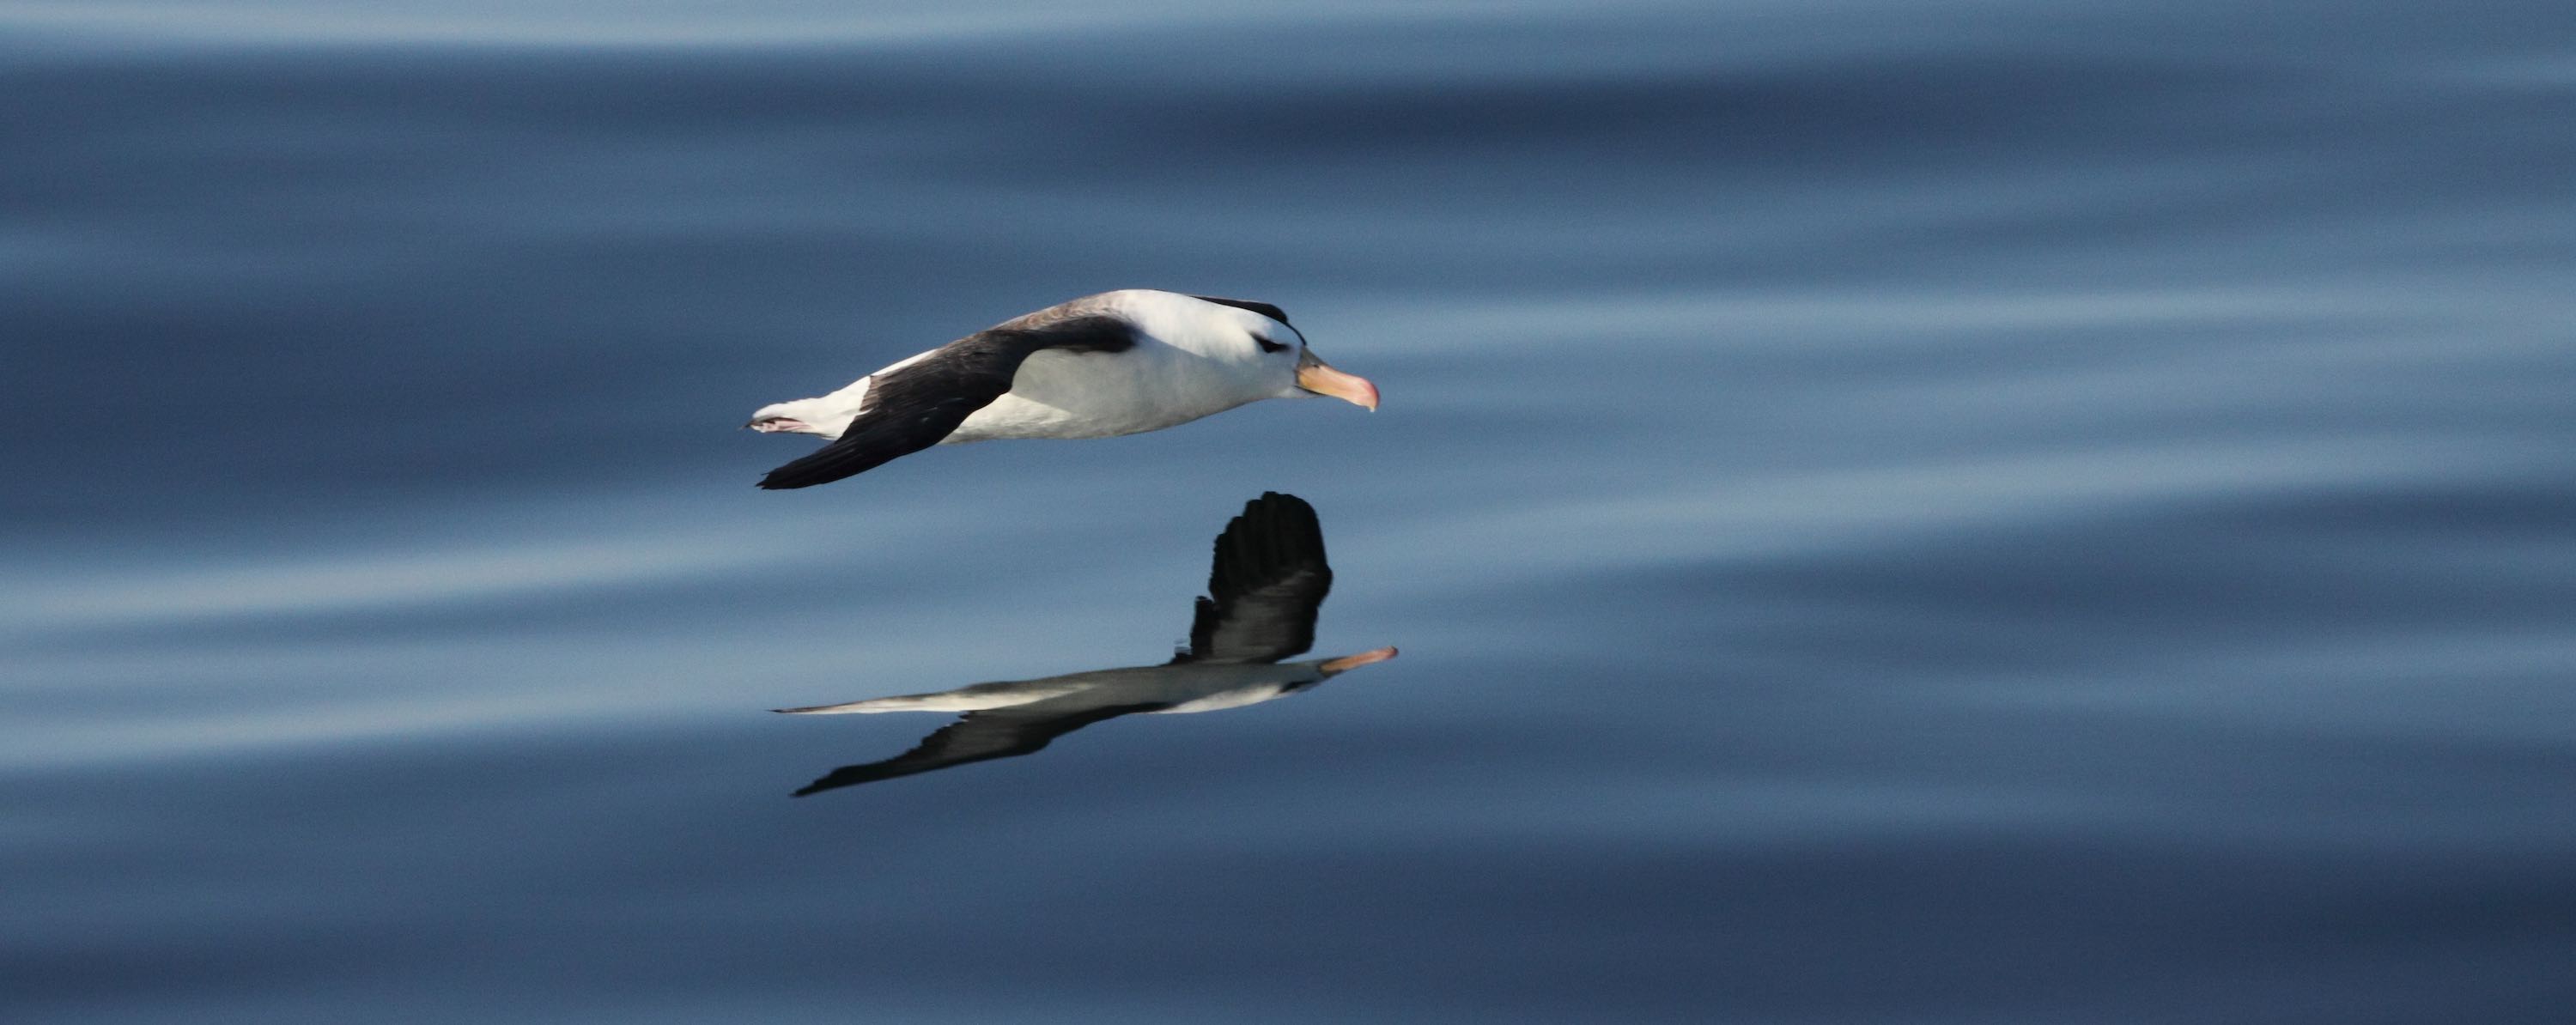 An albatross skimming the sea surface.